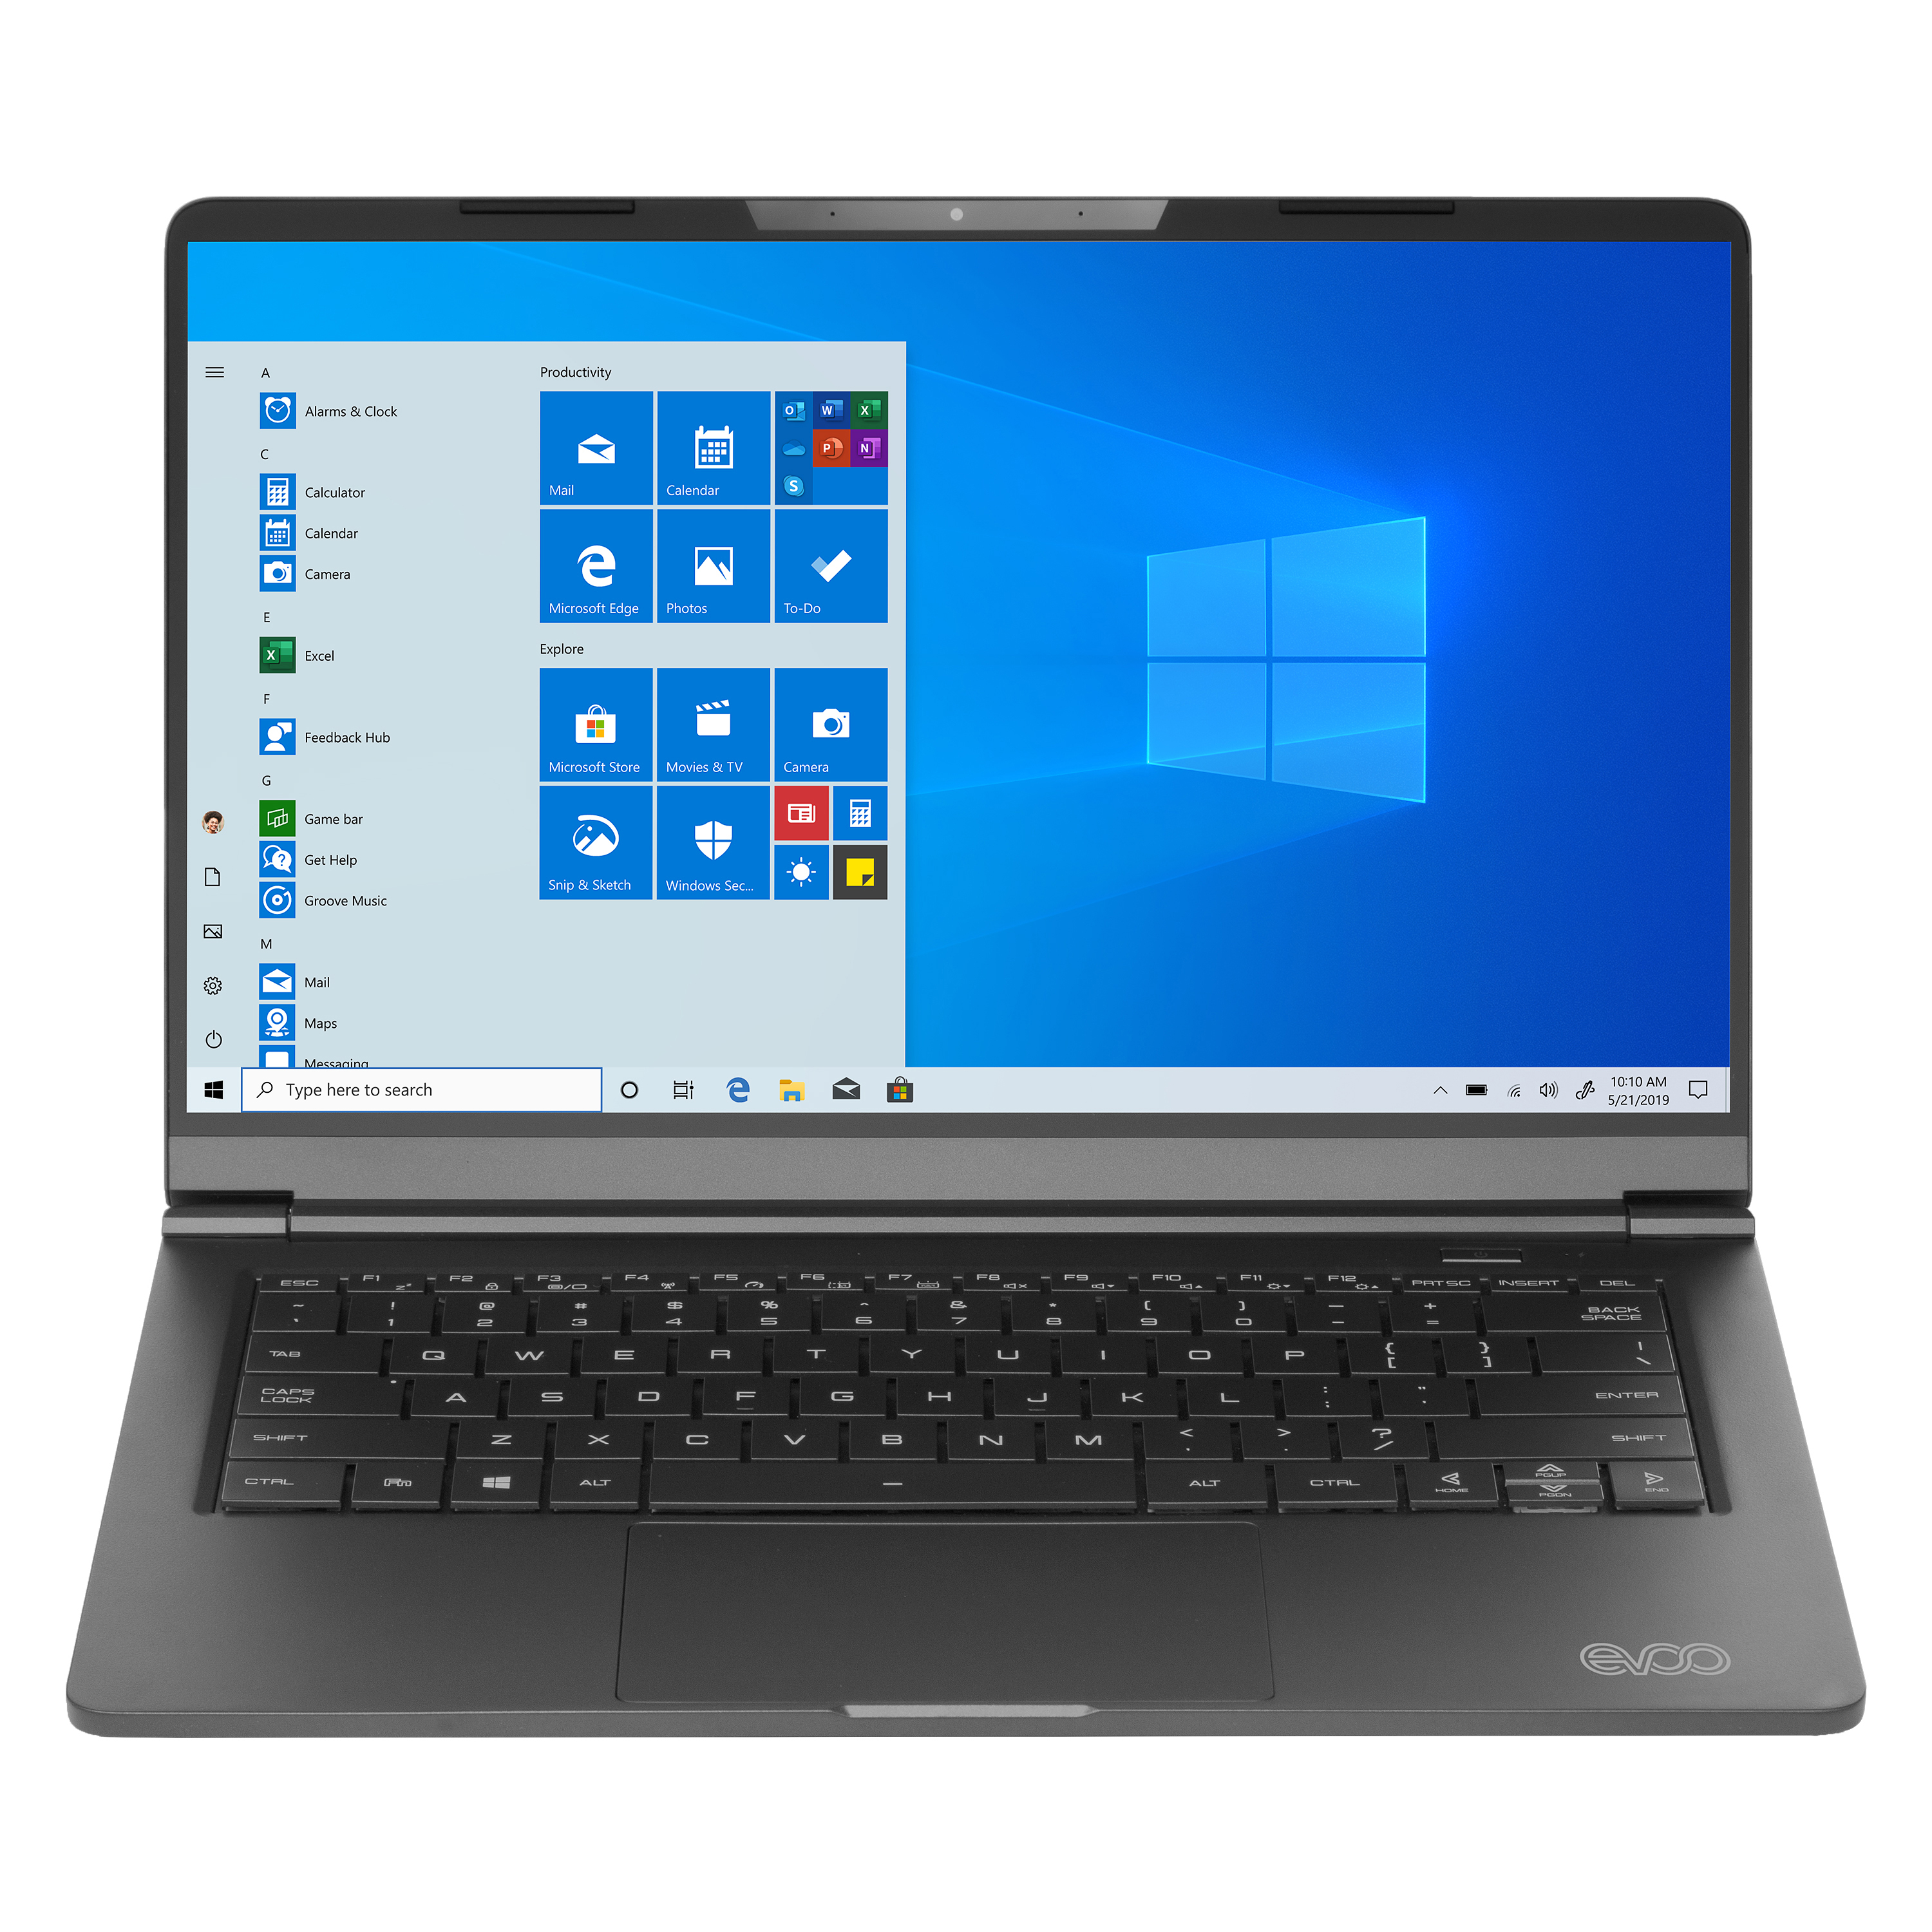 EVOO 14.1” Ultra Slim Notebook - Elite Series, FHD Display, AMD Ryzen 5 3500U Processor with Radeon Vega 8 Graphics, 8GB RAM, 256GB SSD, HD Webcam, Windows 10 Home, Black - image 1 of 9